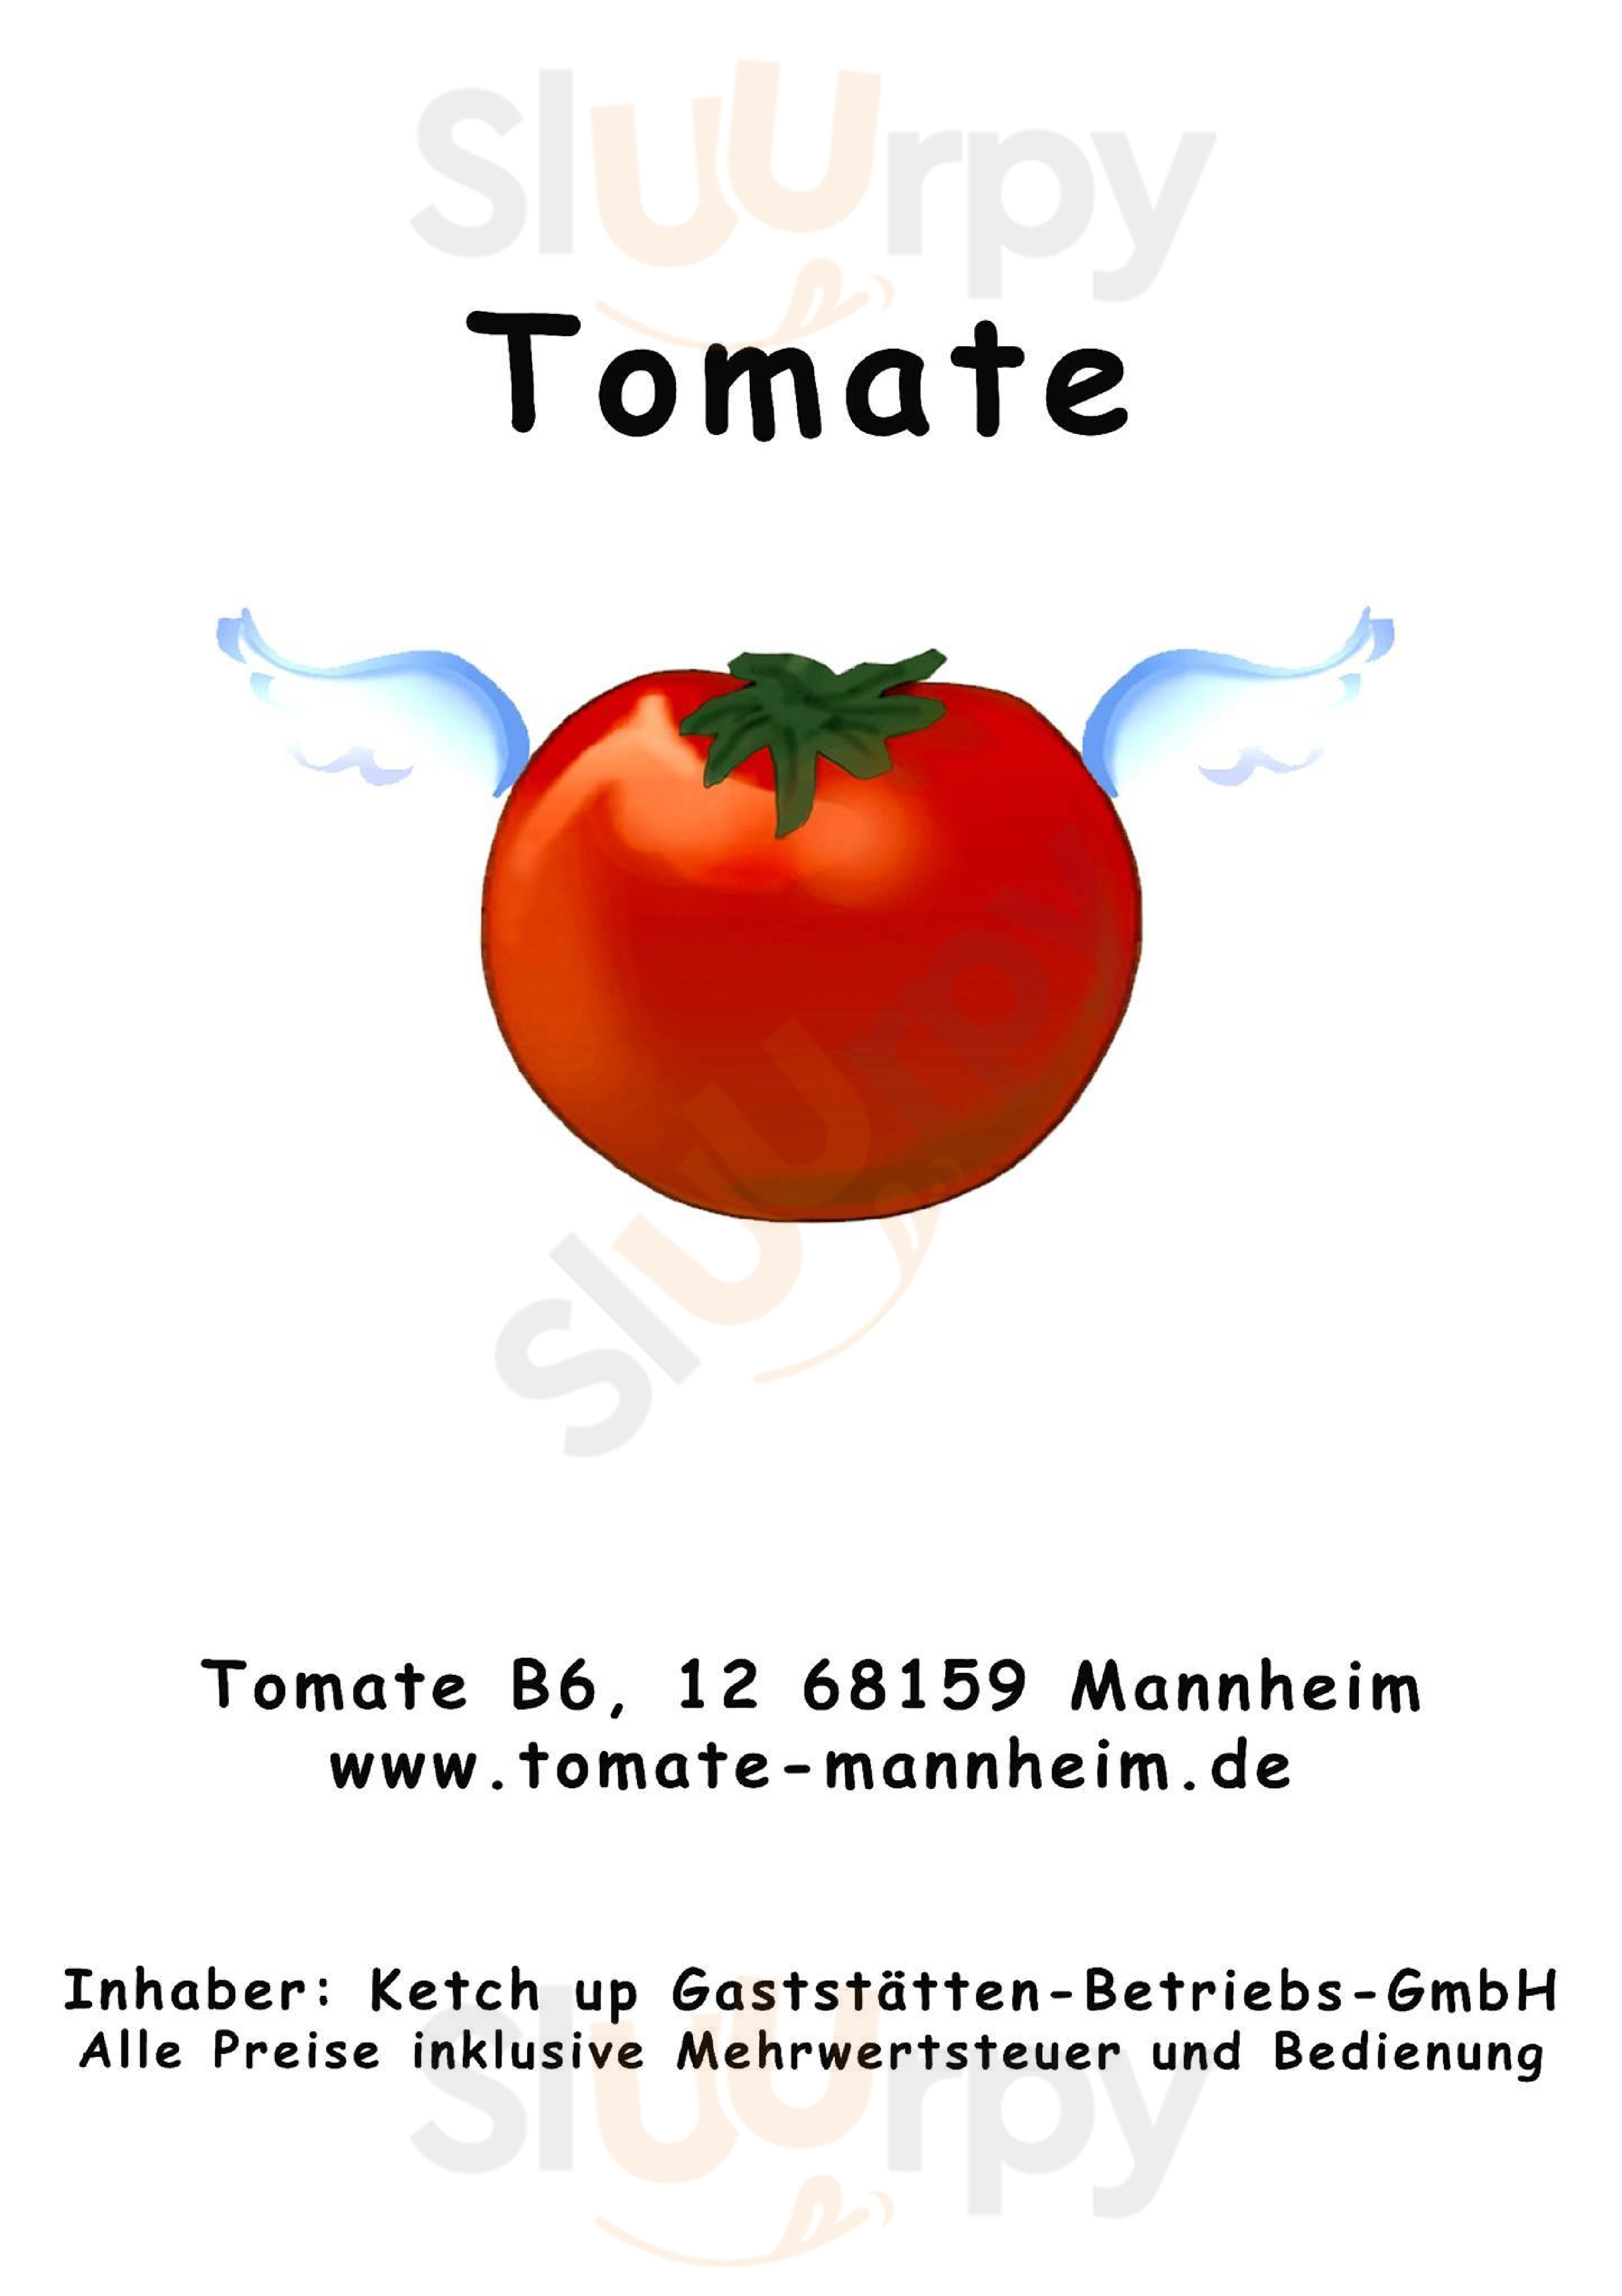 Tomate Mannheim Menu - 1